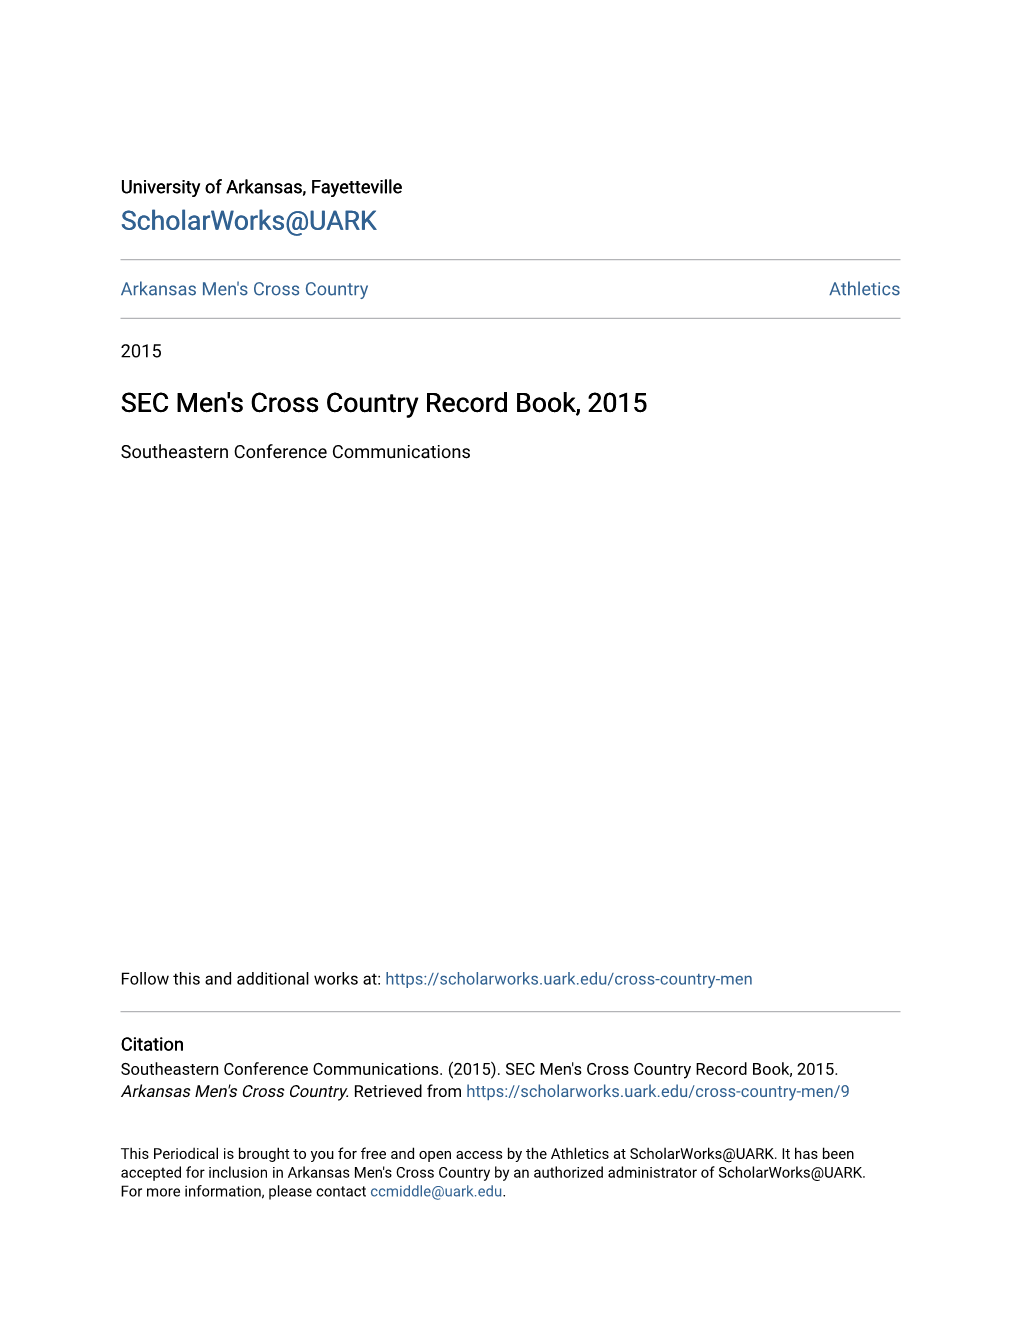 SEC Men's Cross Country Record Book, 2015